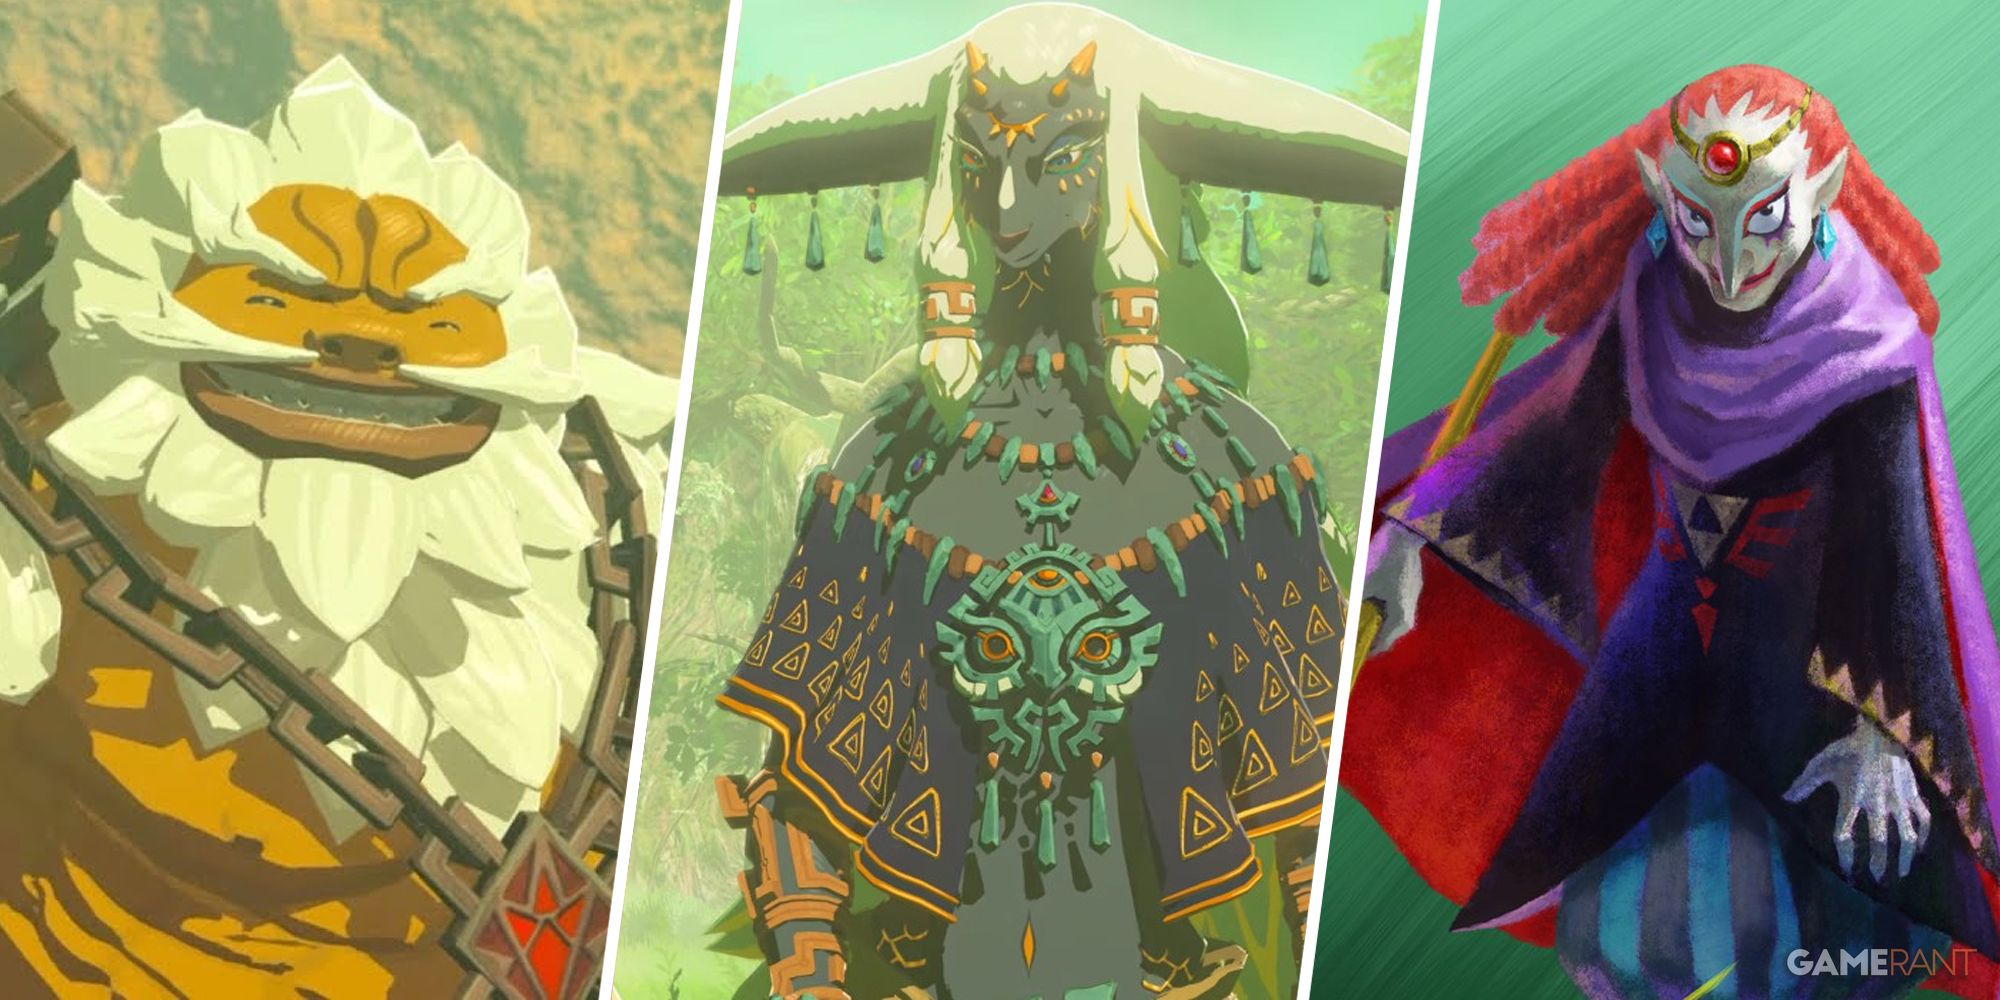 Daruk, Rauru, and Yuga from the Legend of Zelda franchise